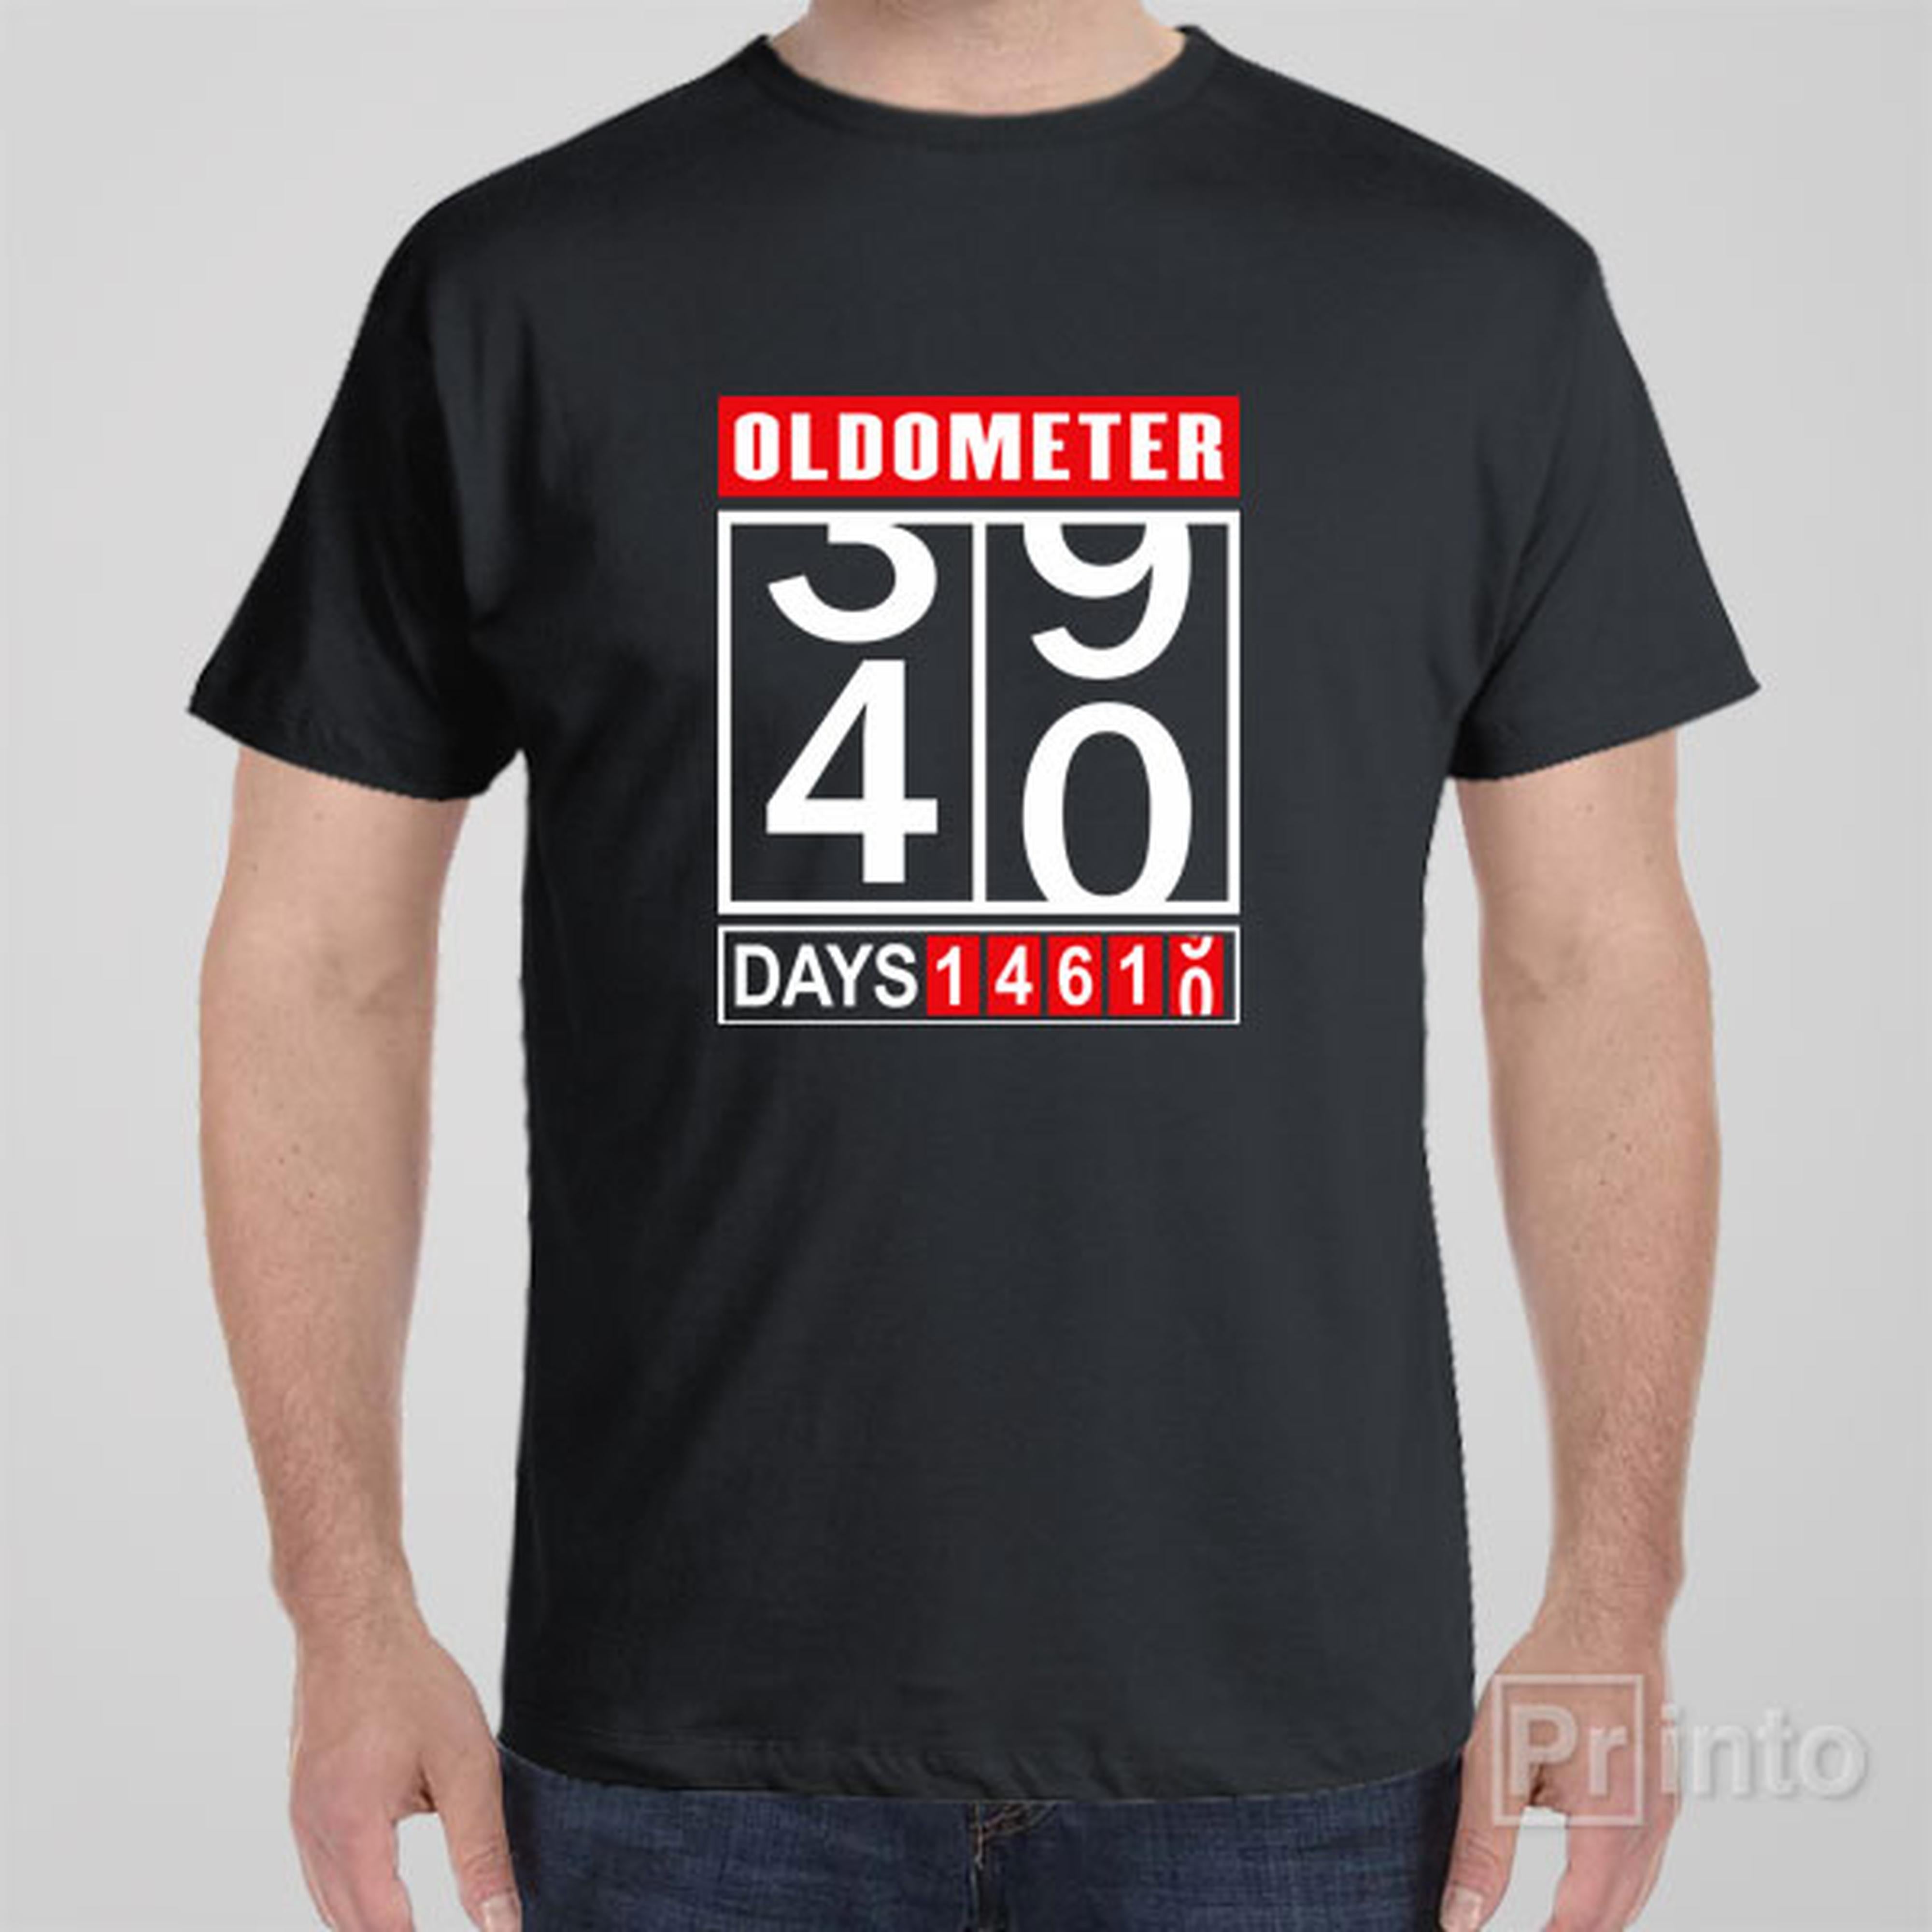 oldometer-40th-birthday-t-shirt